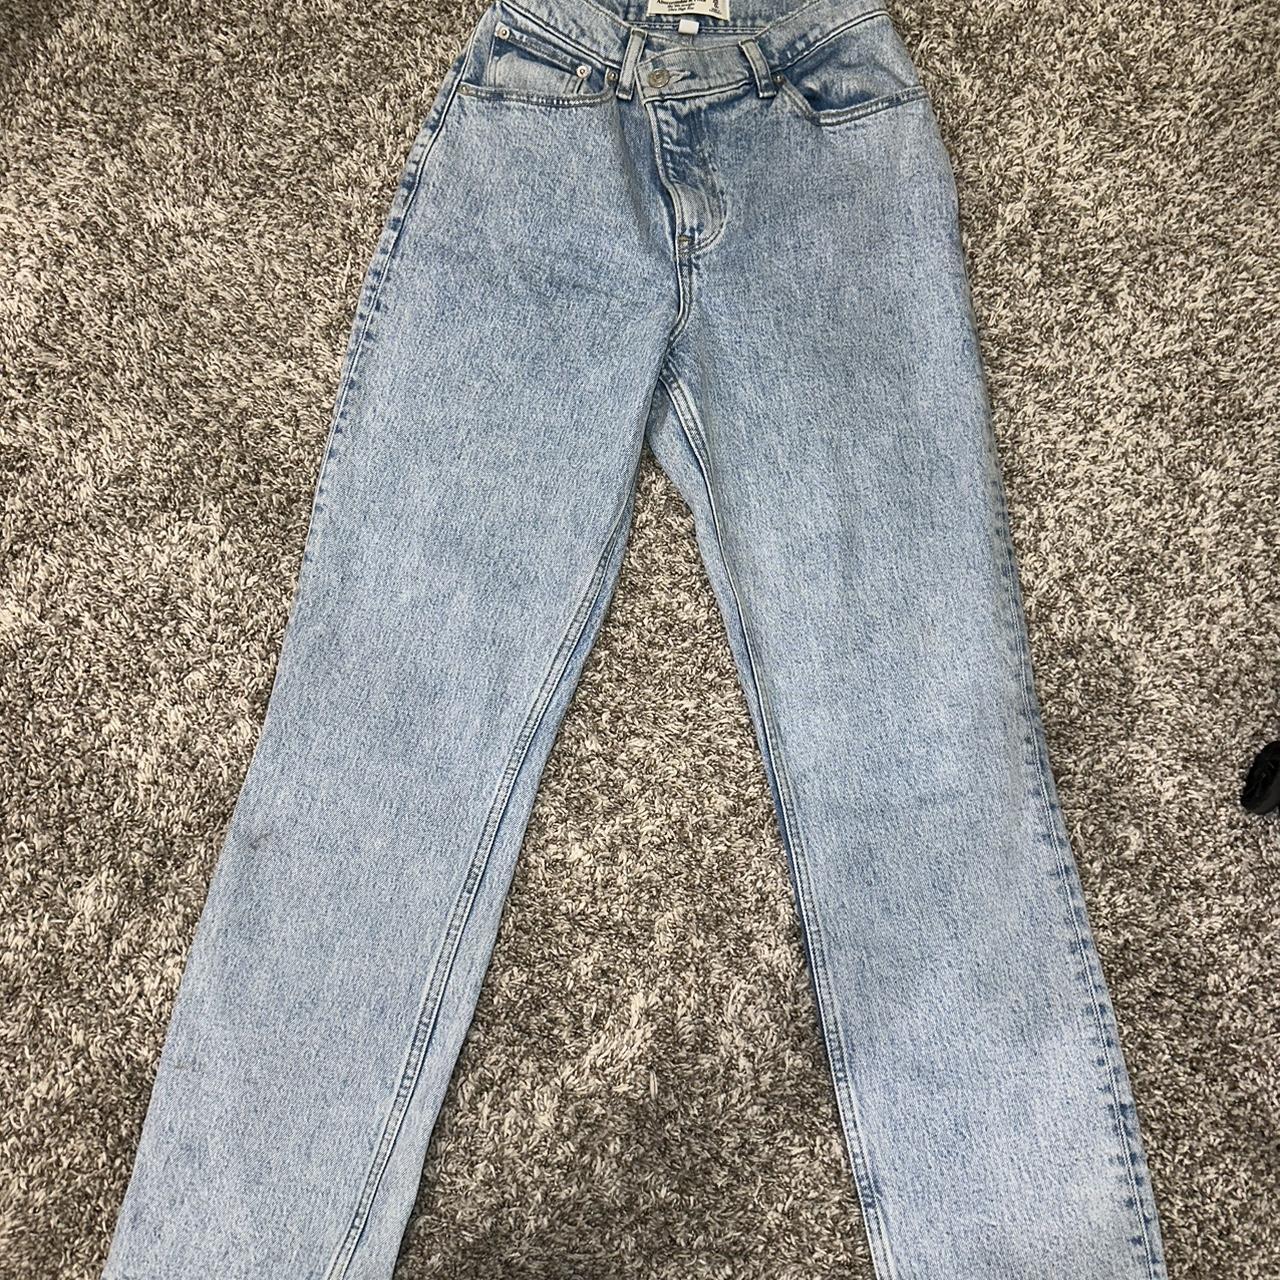 Abercrombie jeans - Depop